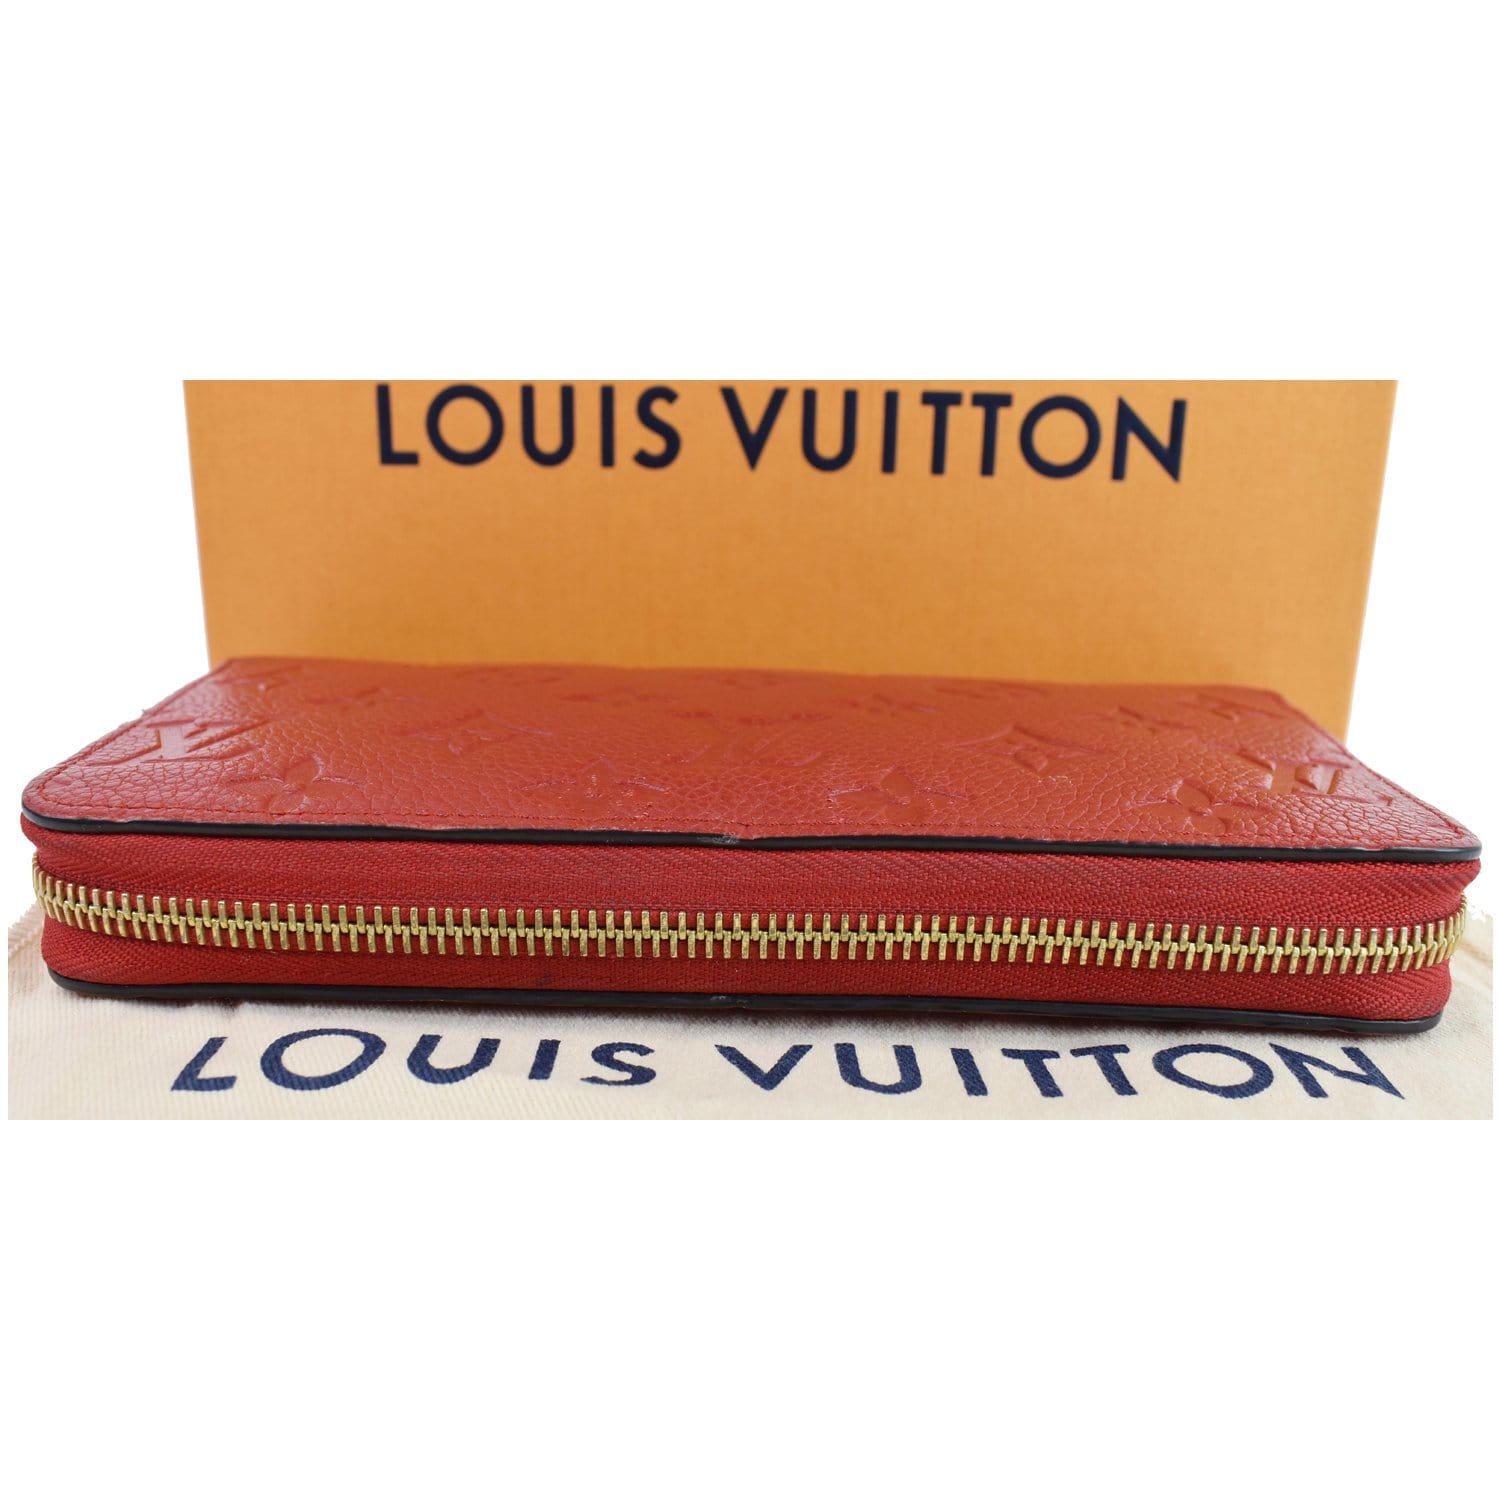 Louis Vuitton Monogram Empreinte Leather Zippy Wallet w/ Box